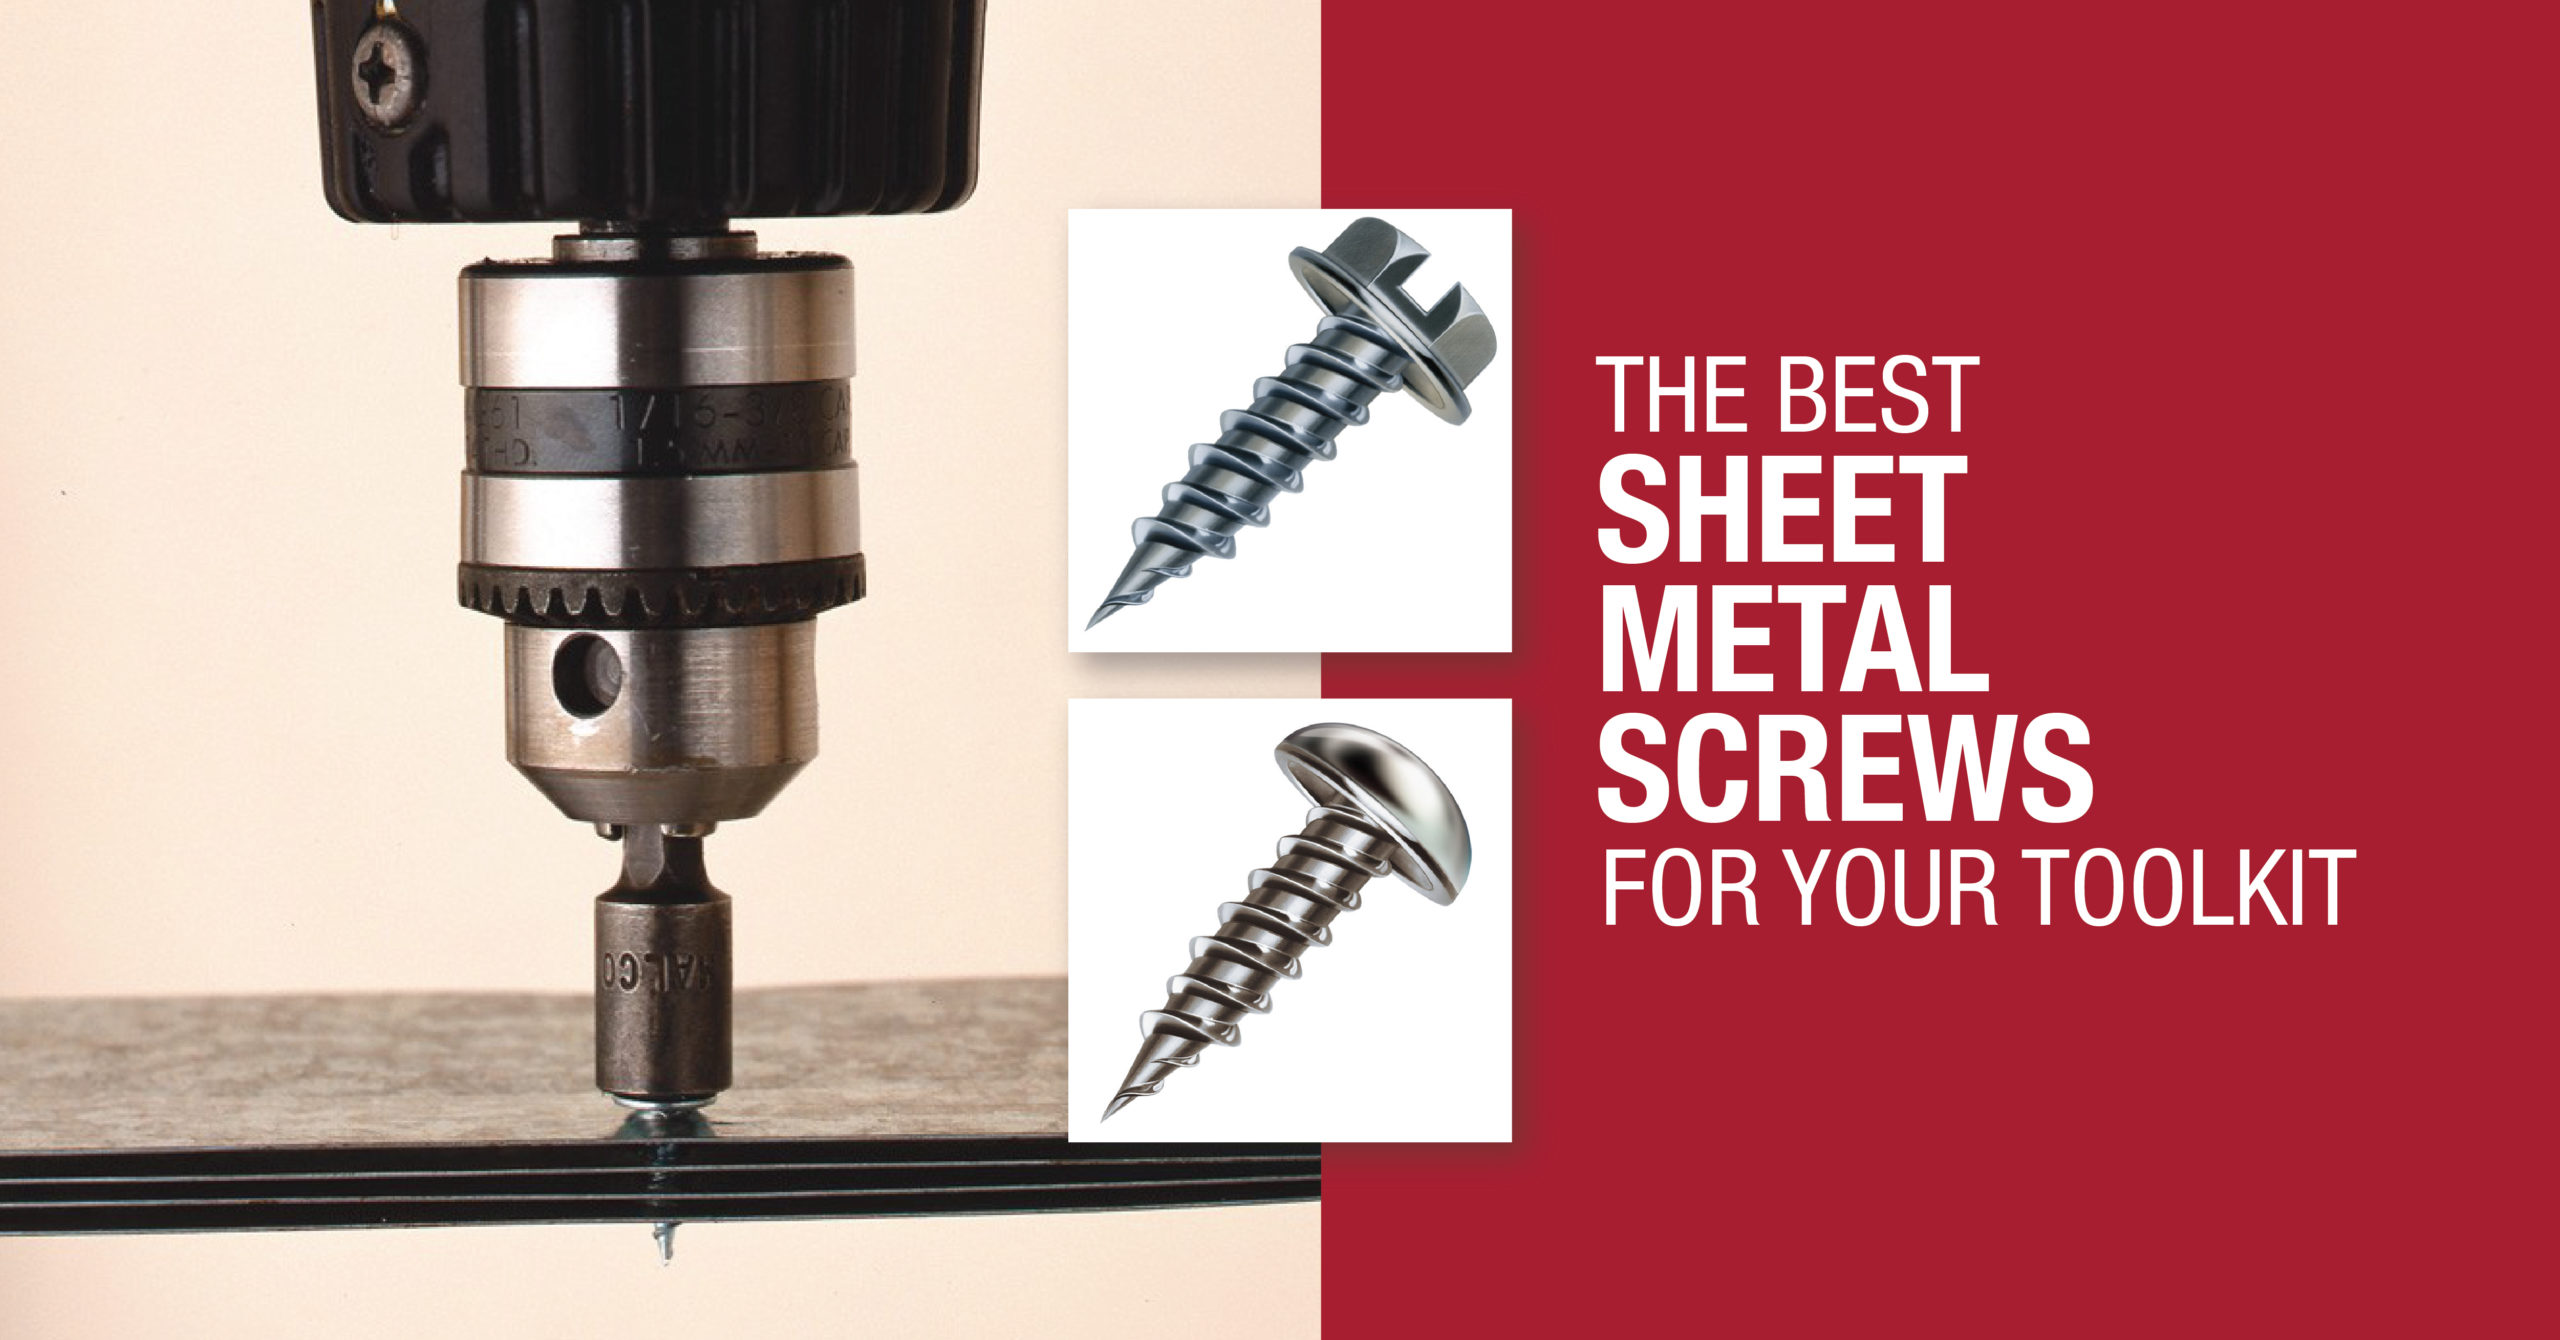 Malco's Best Sheet Metal Screws: Zip-ins